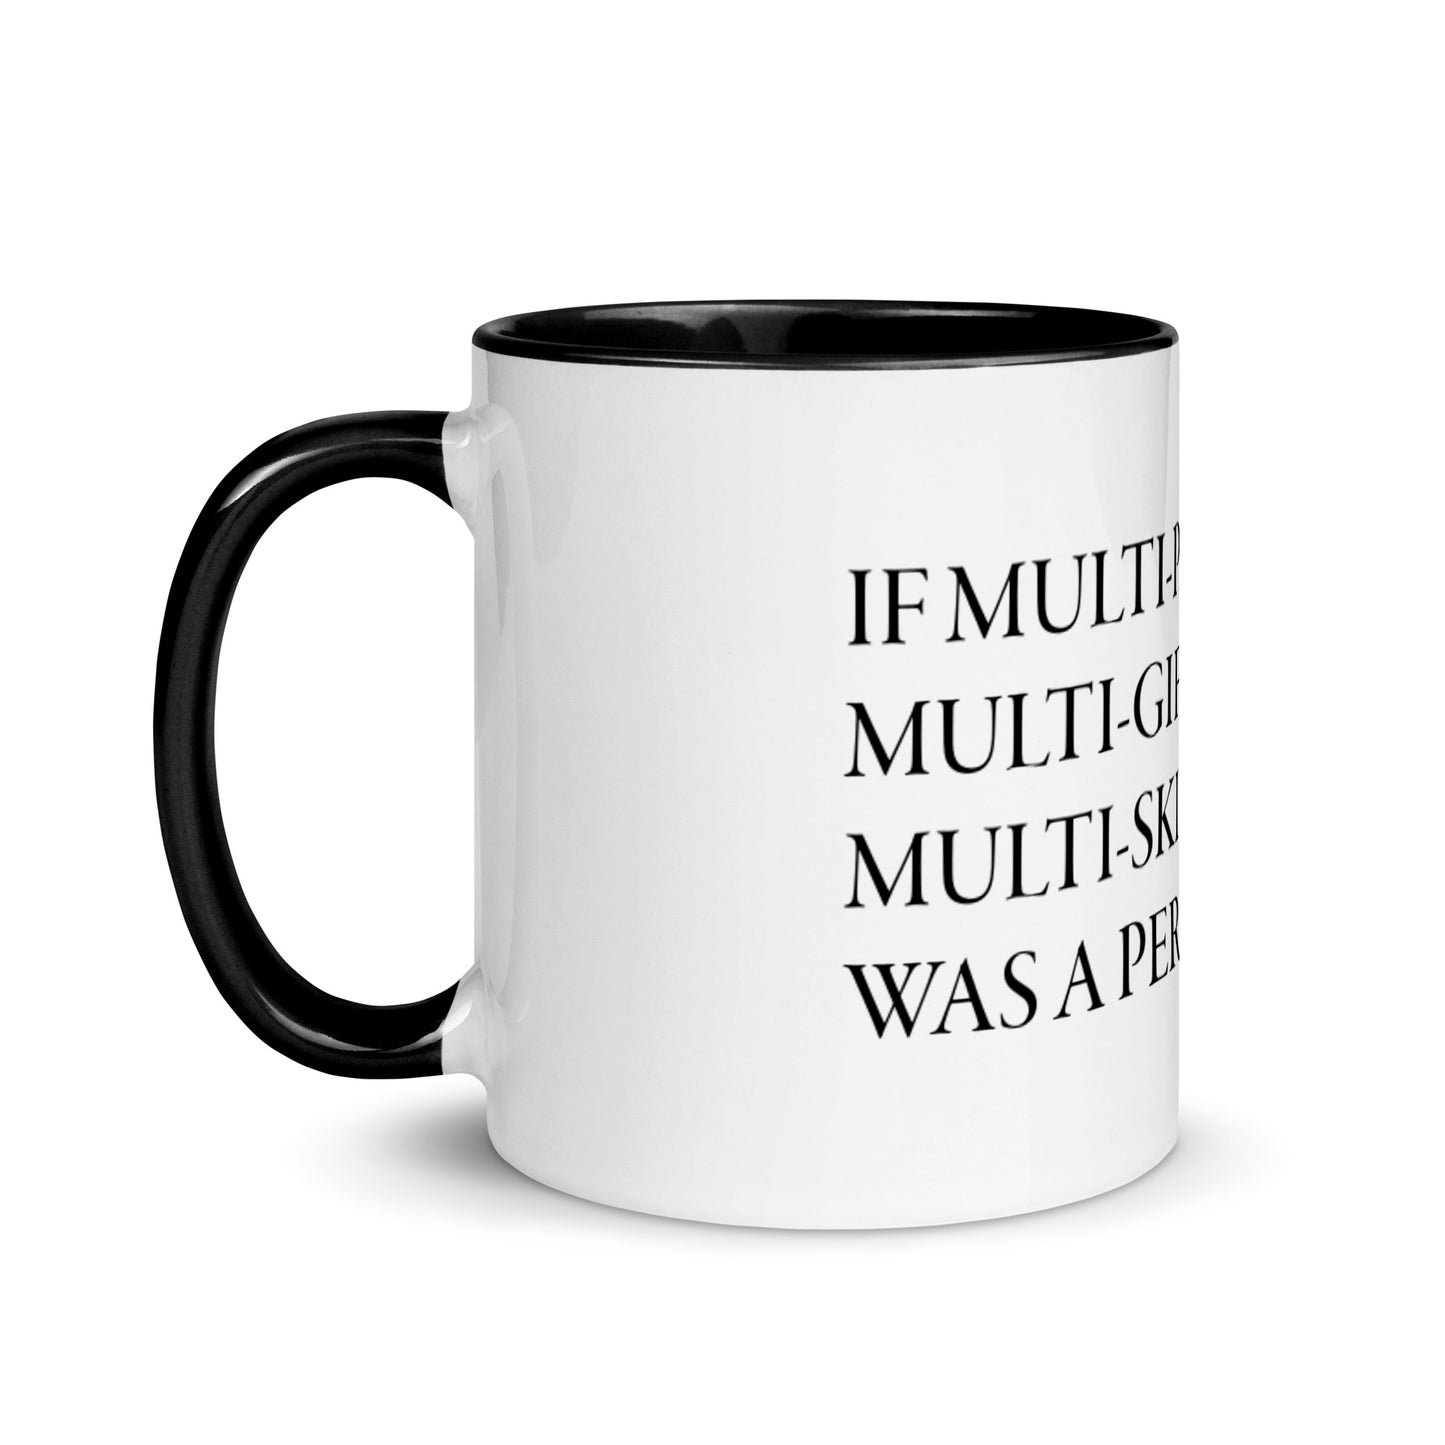 MULTI Mug with Color Inside